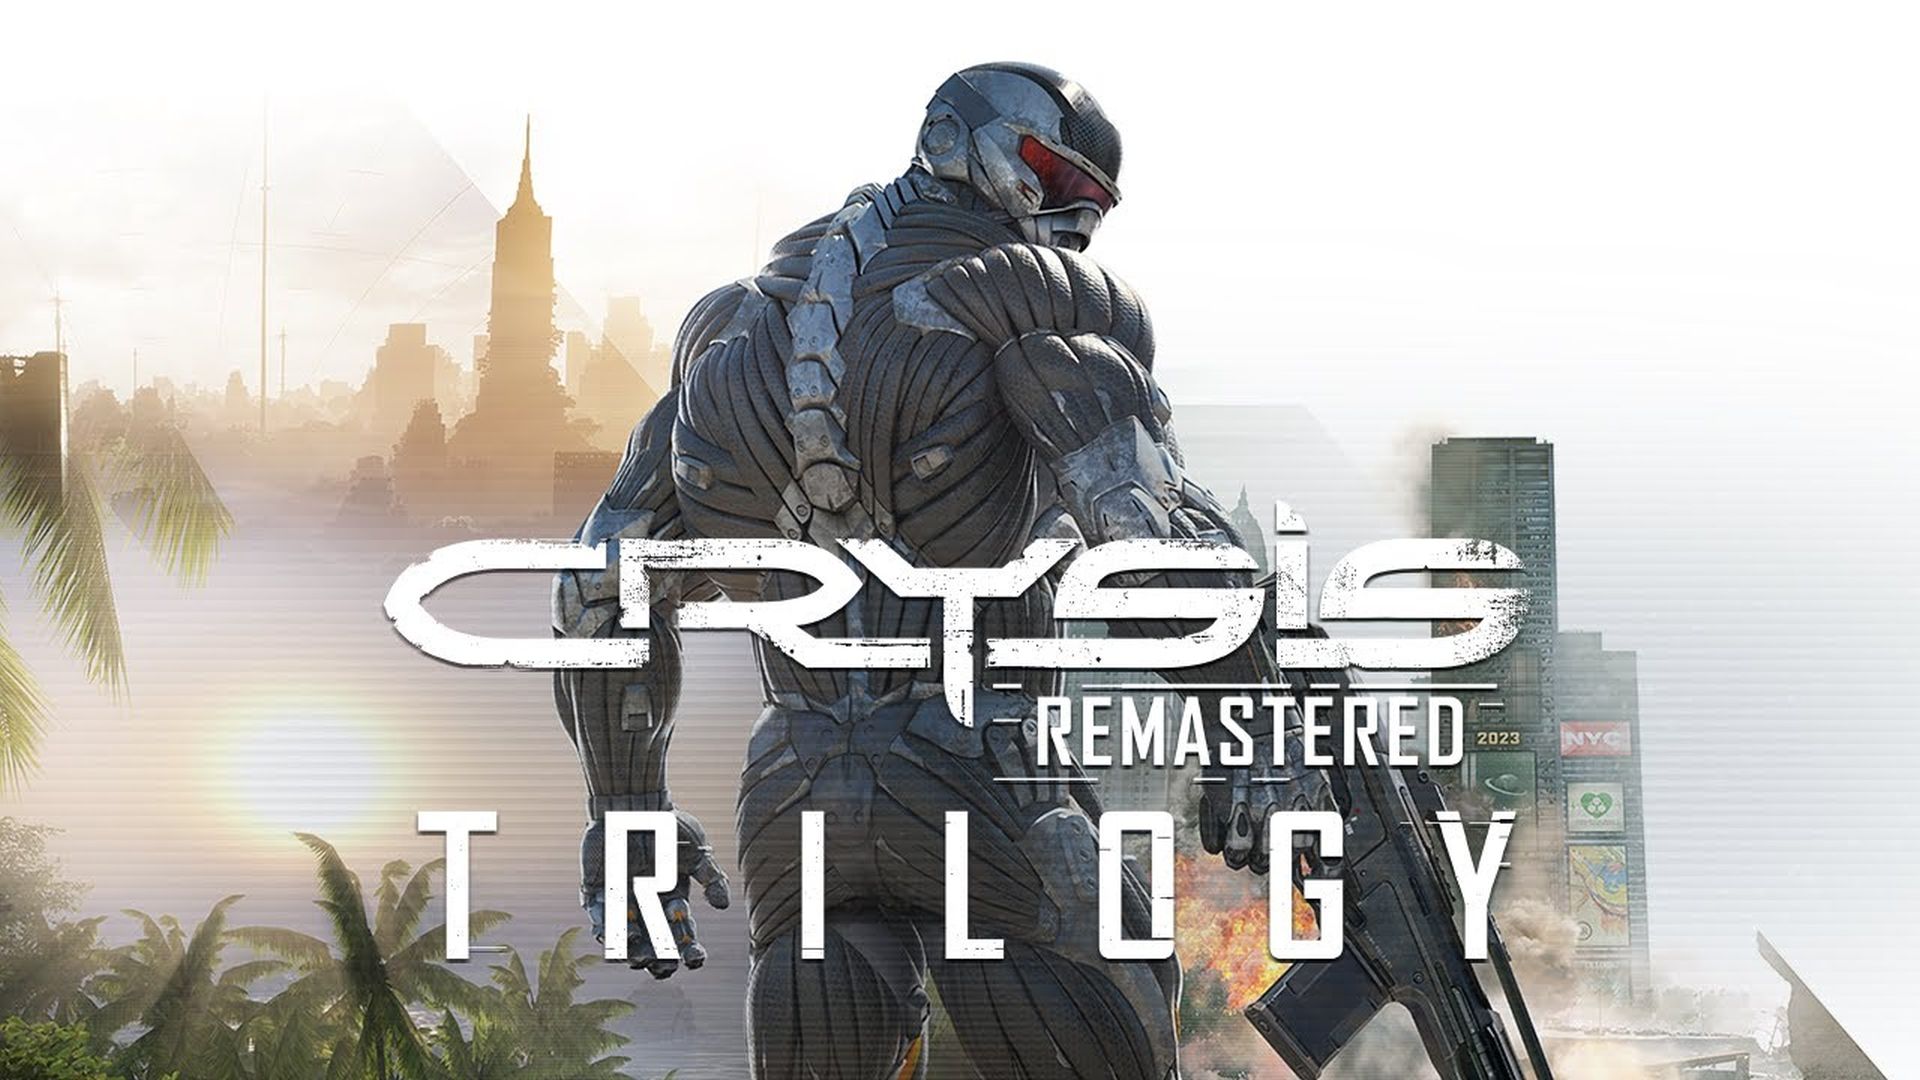 crysis 3 remastered pc download free